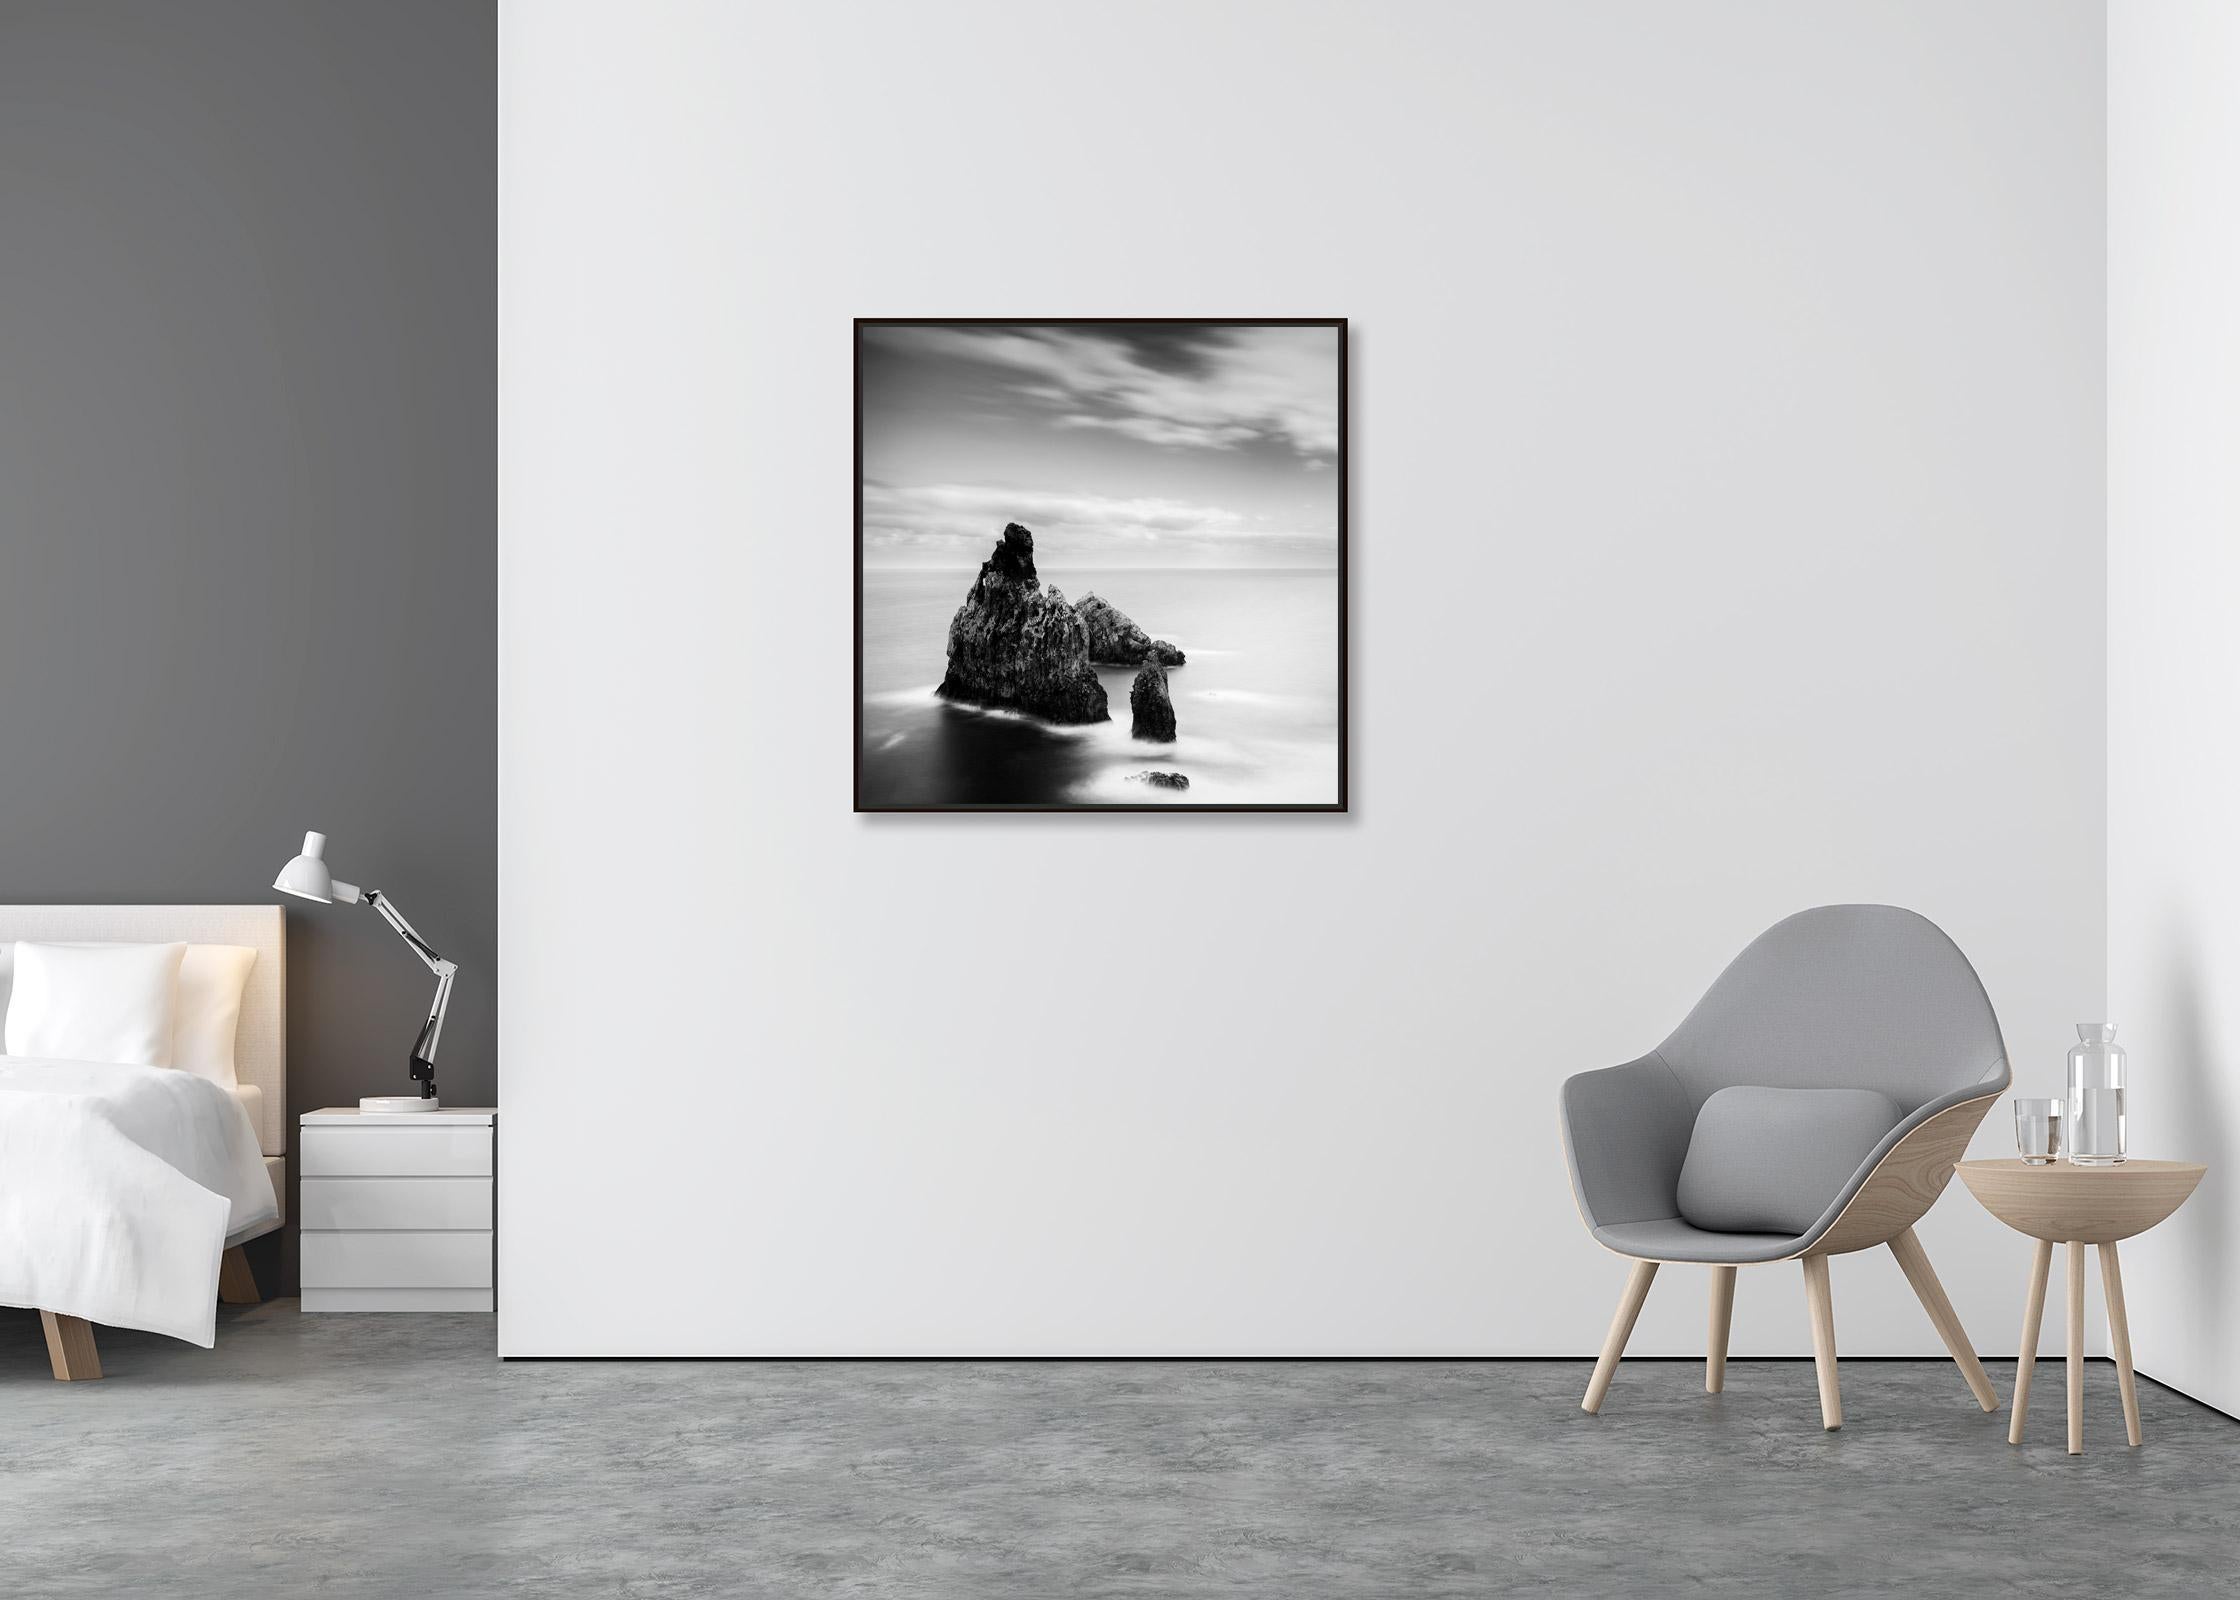 Ribeira da Janela Rocks, shoreline, black and white art waterscape photography - Contemporary Photograph by Gerald Berghammer